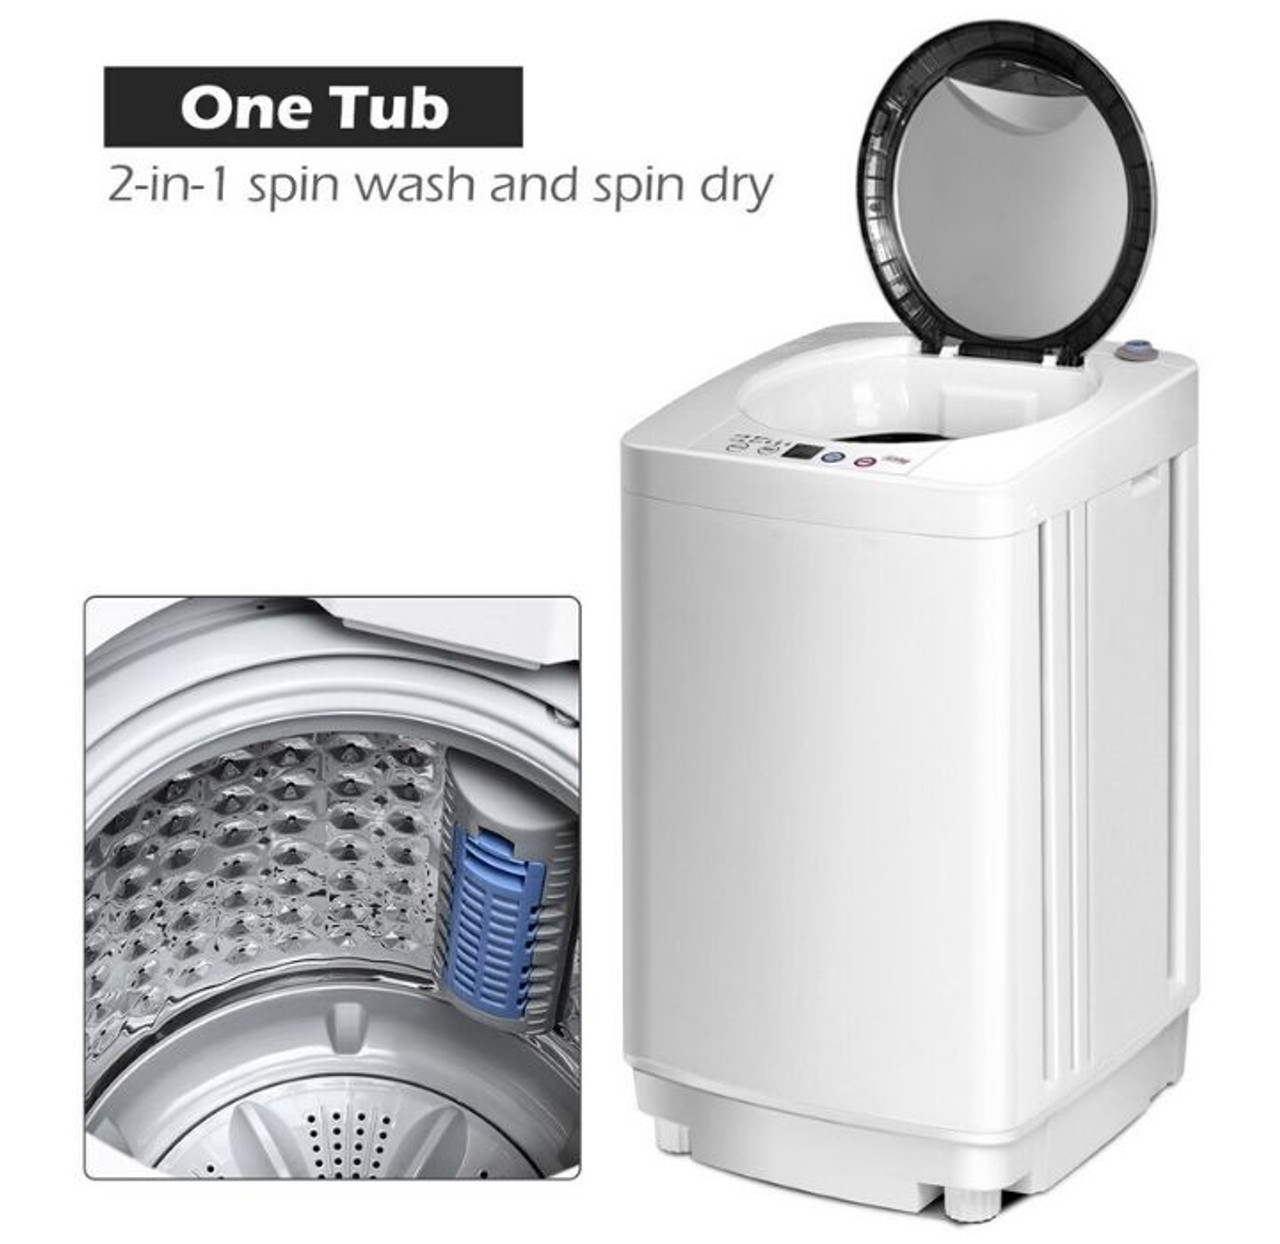 Costway Full-Automatic Laundry Washing Machine product image